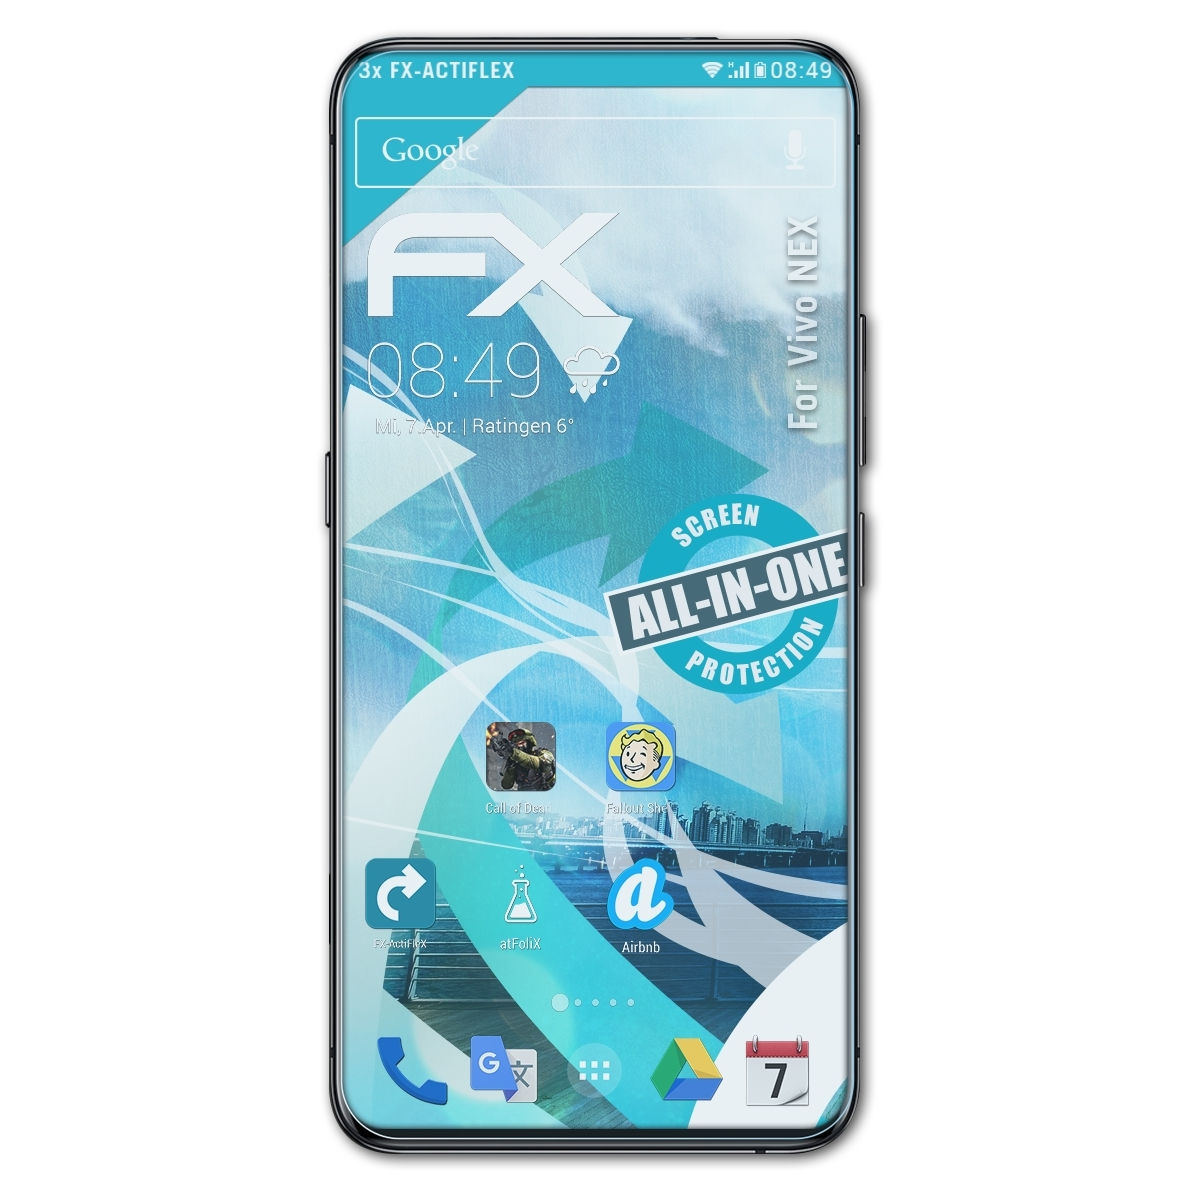 ATFOLIX Vivo Displayschutz(für 3x NEX) FX-ActiFleX